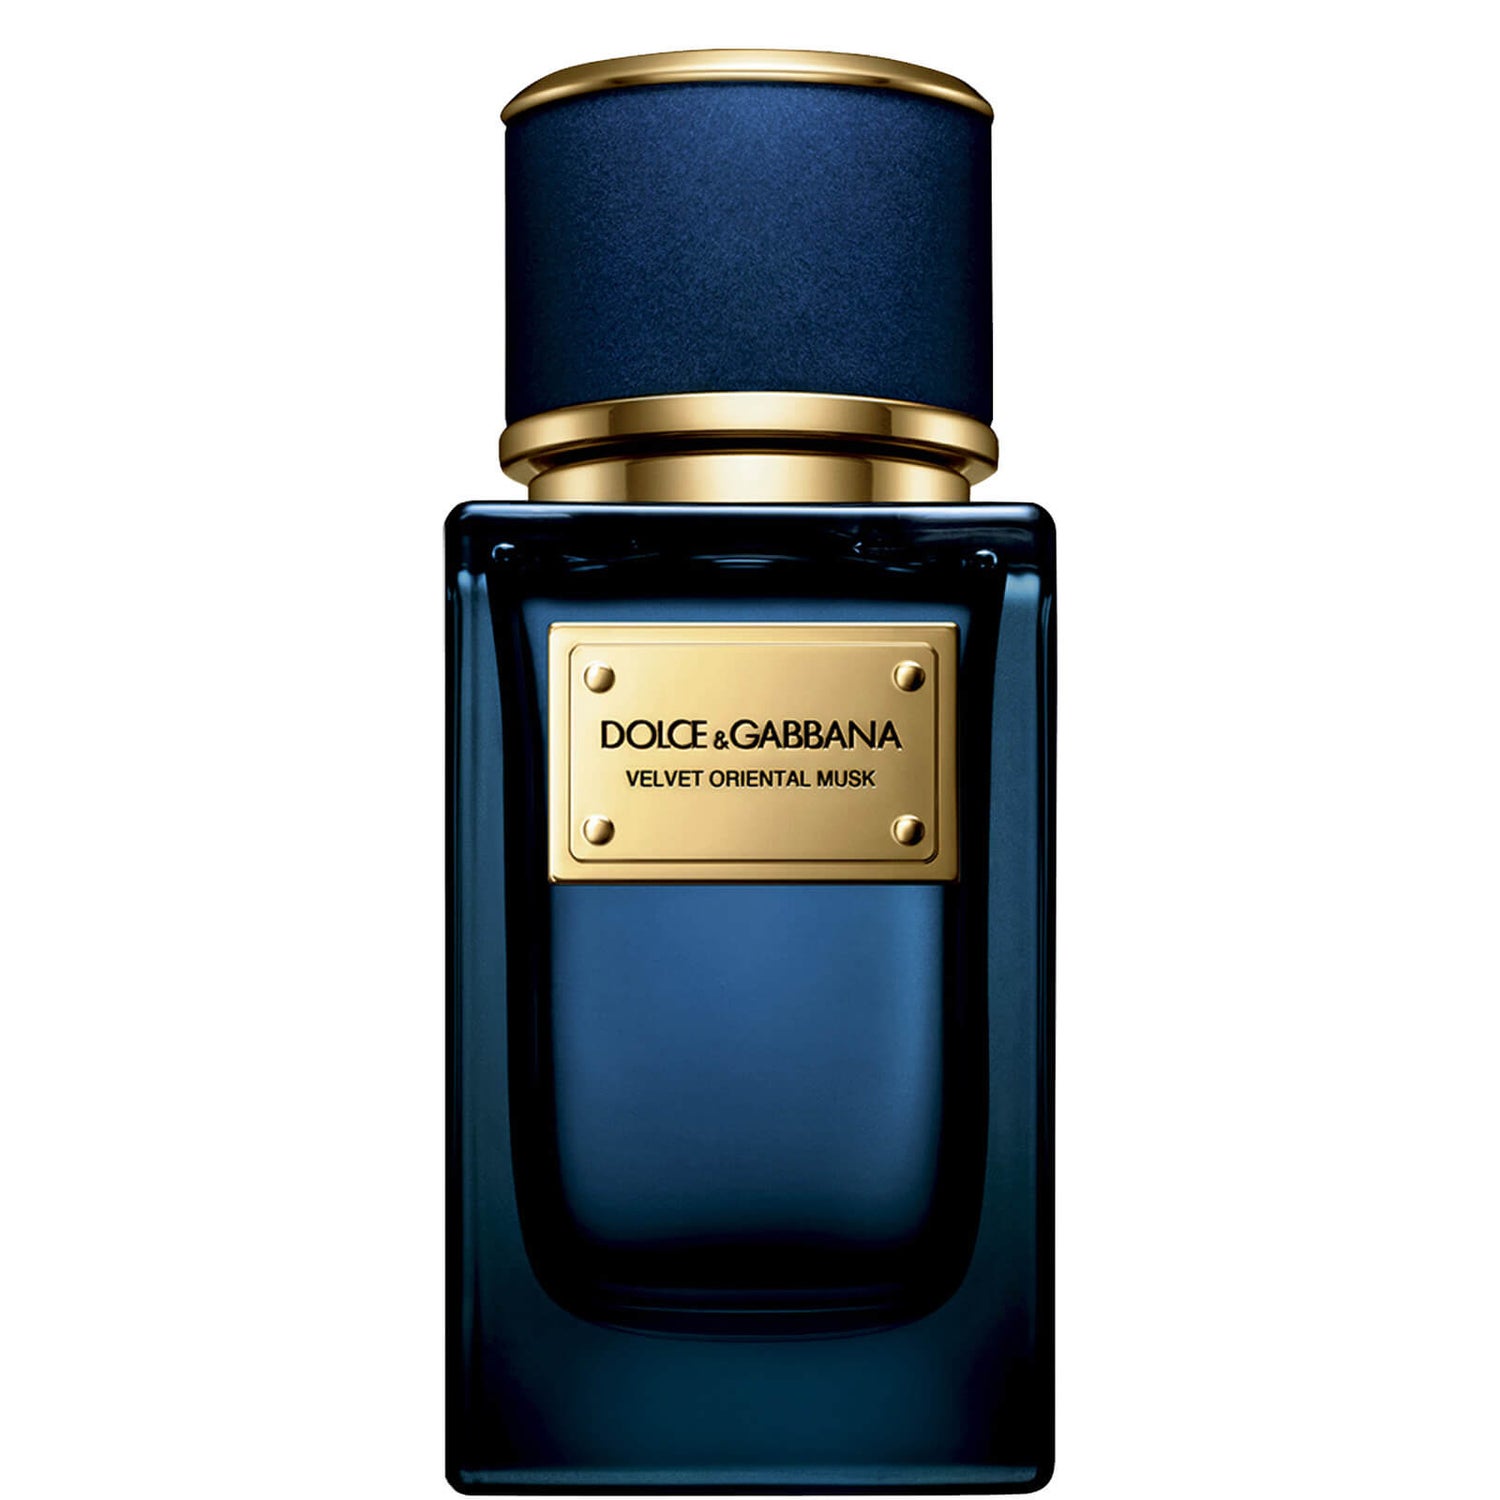 Dolce&Gabbana Velvet Oriental Musk Eau de Parfum - 50ml Dolce&Gabbana Velvet Oriental Musk parfémovaná voda - 50 ml